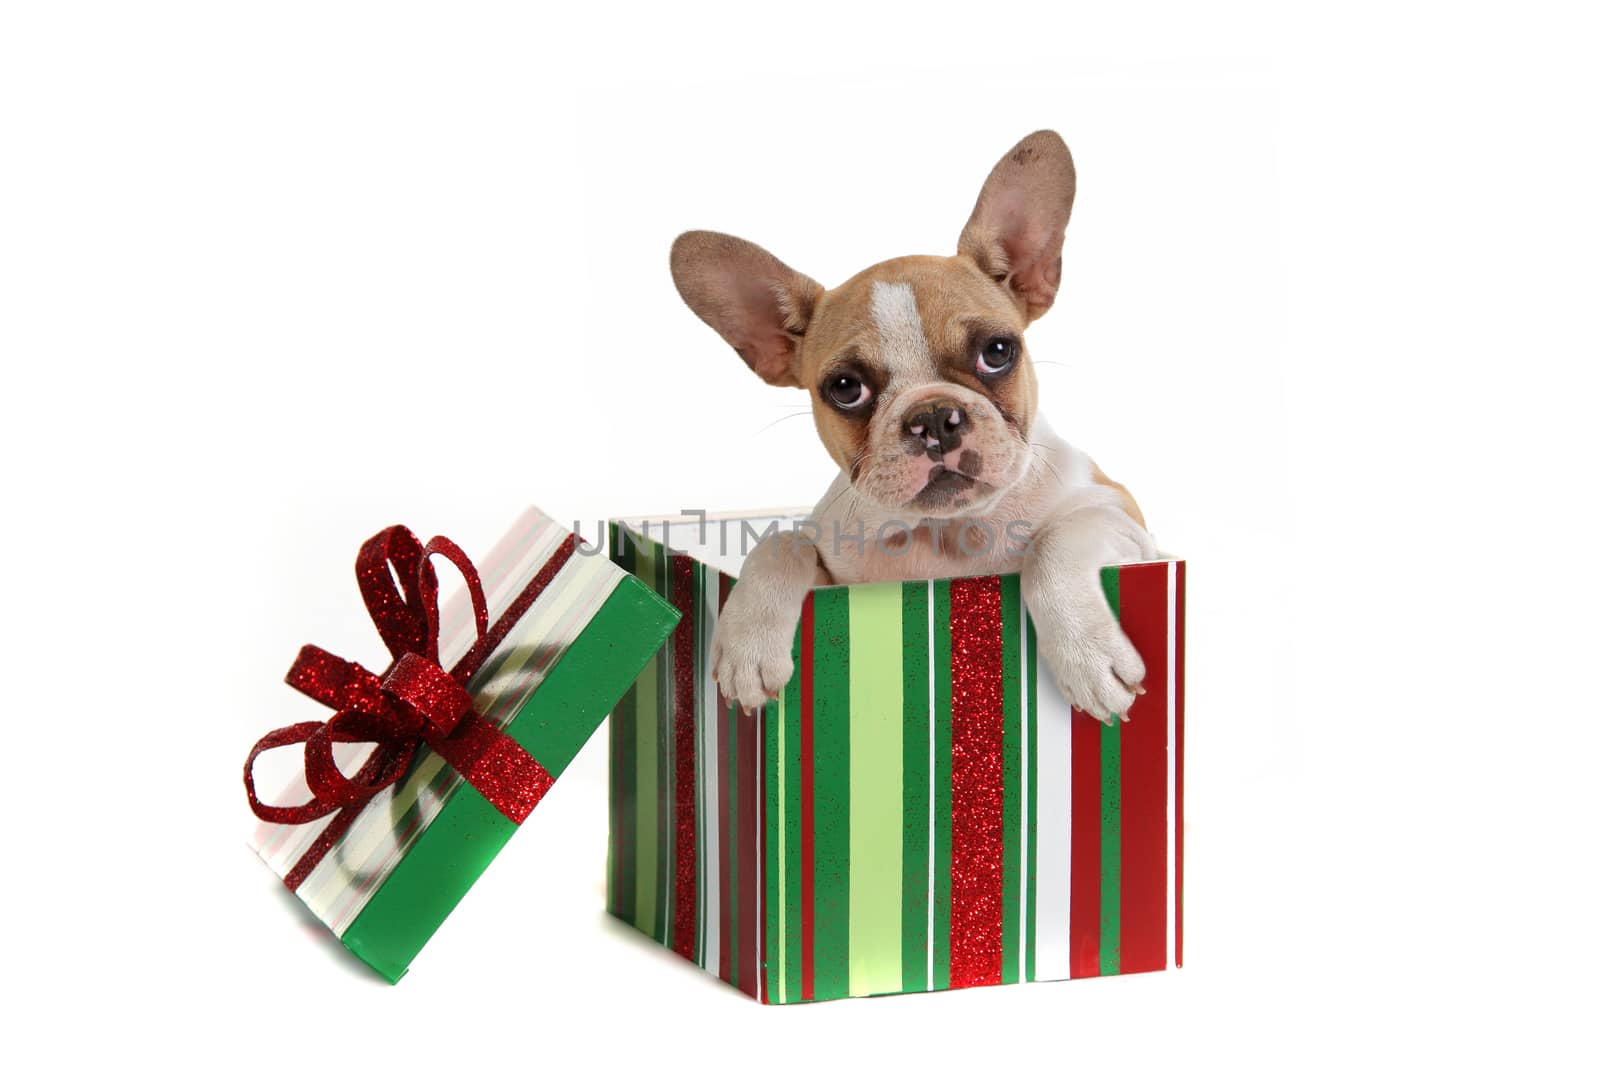 Puppy Dog Inside a Christmas Gift Studio Shot